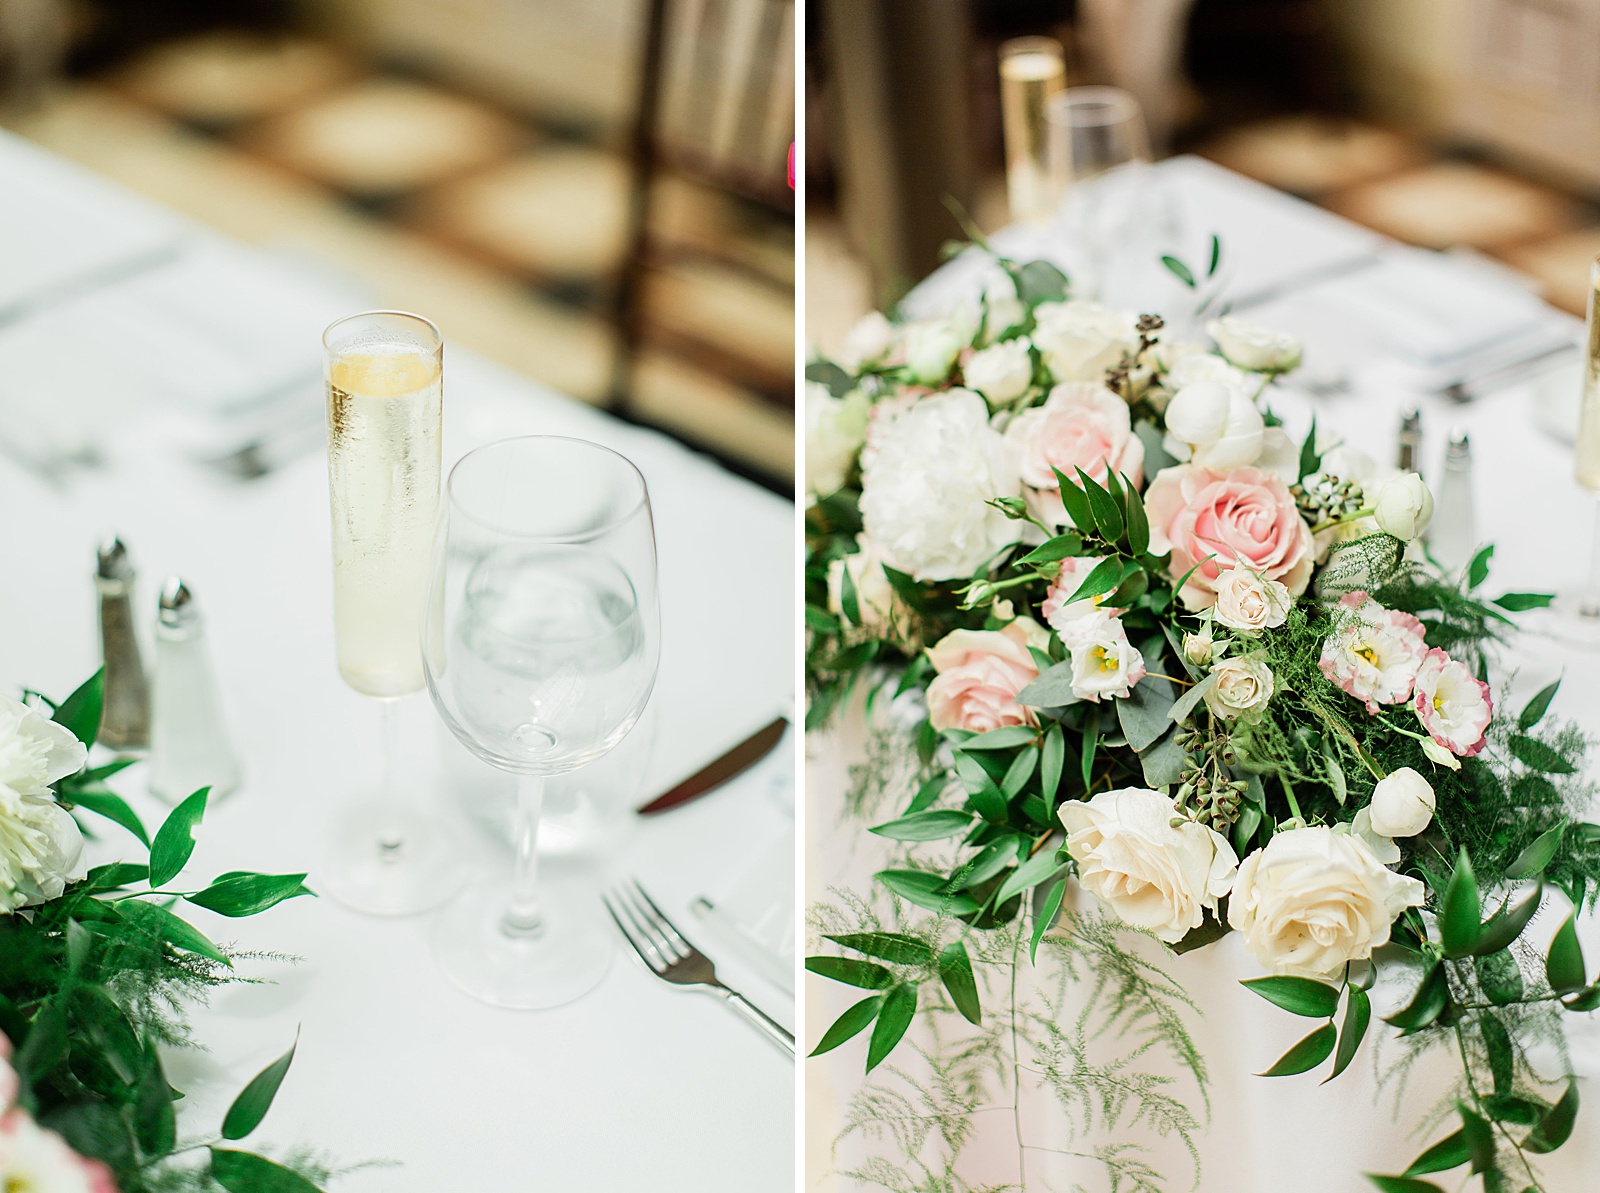 Modern Blush and Greenery Reception at The Addison designed by NYC Wedding Planner, Poppy + Lynn